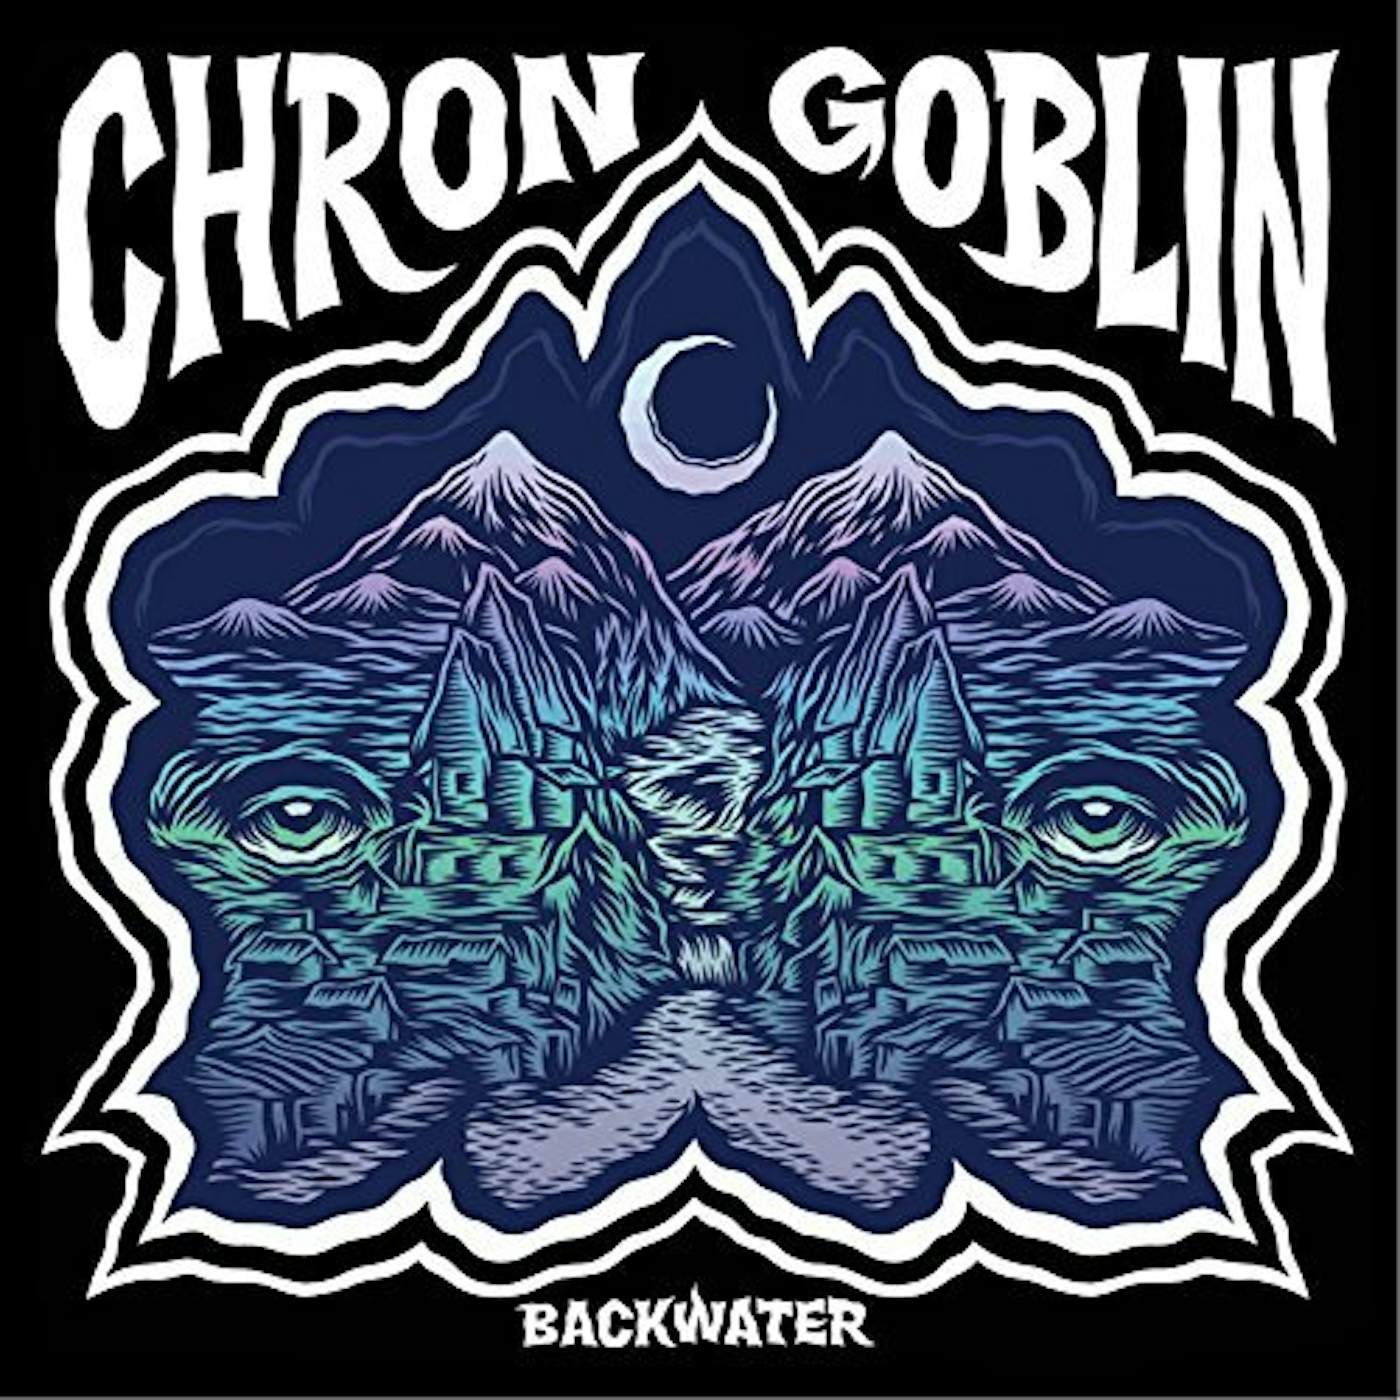 Chron Goblin Backwater Vinyl Record